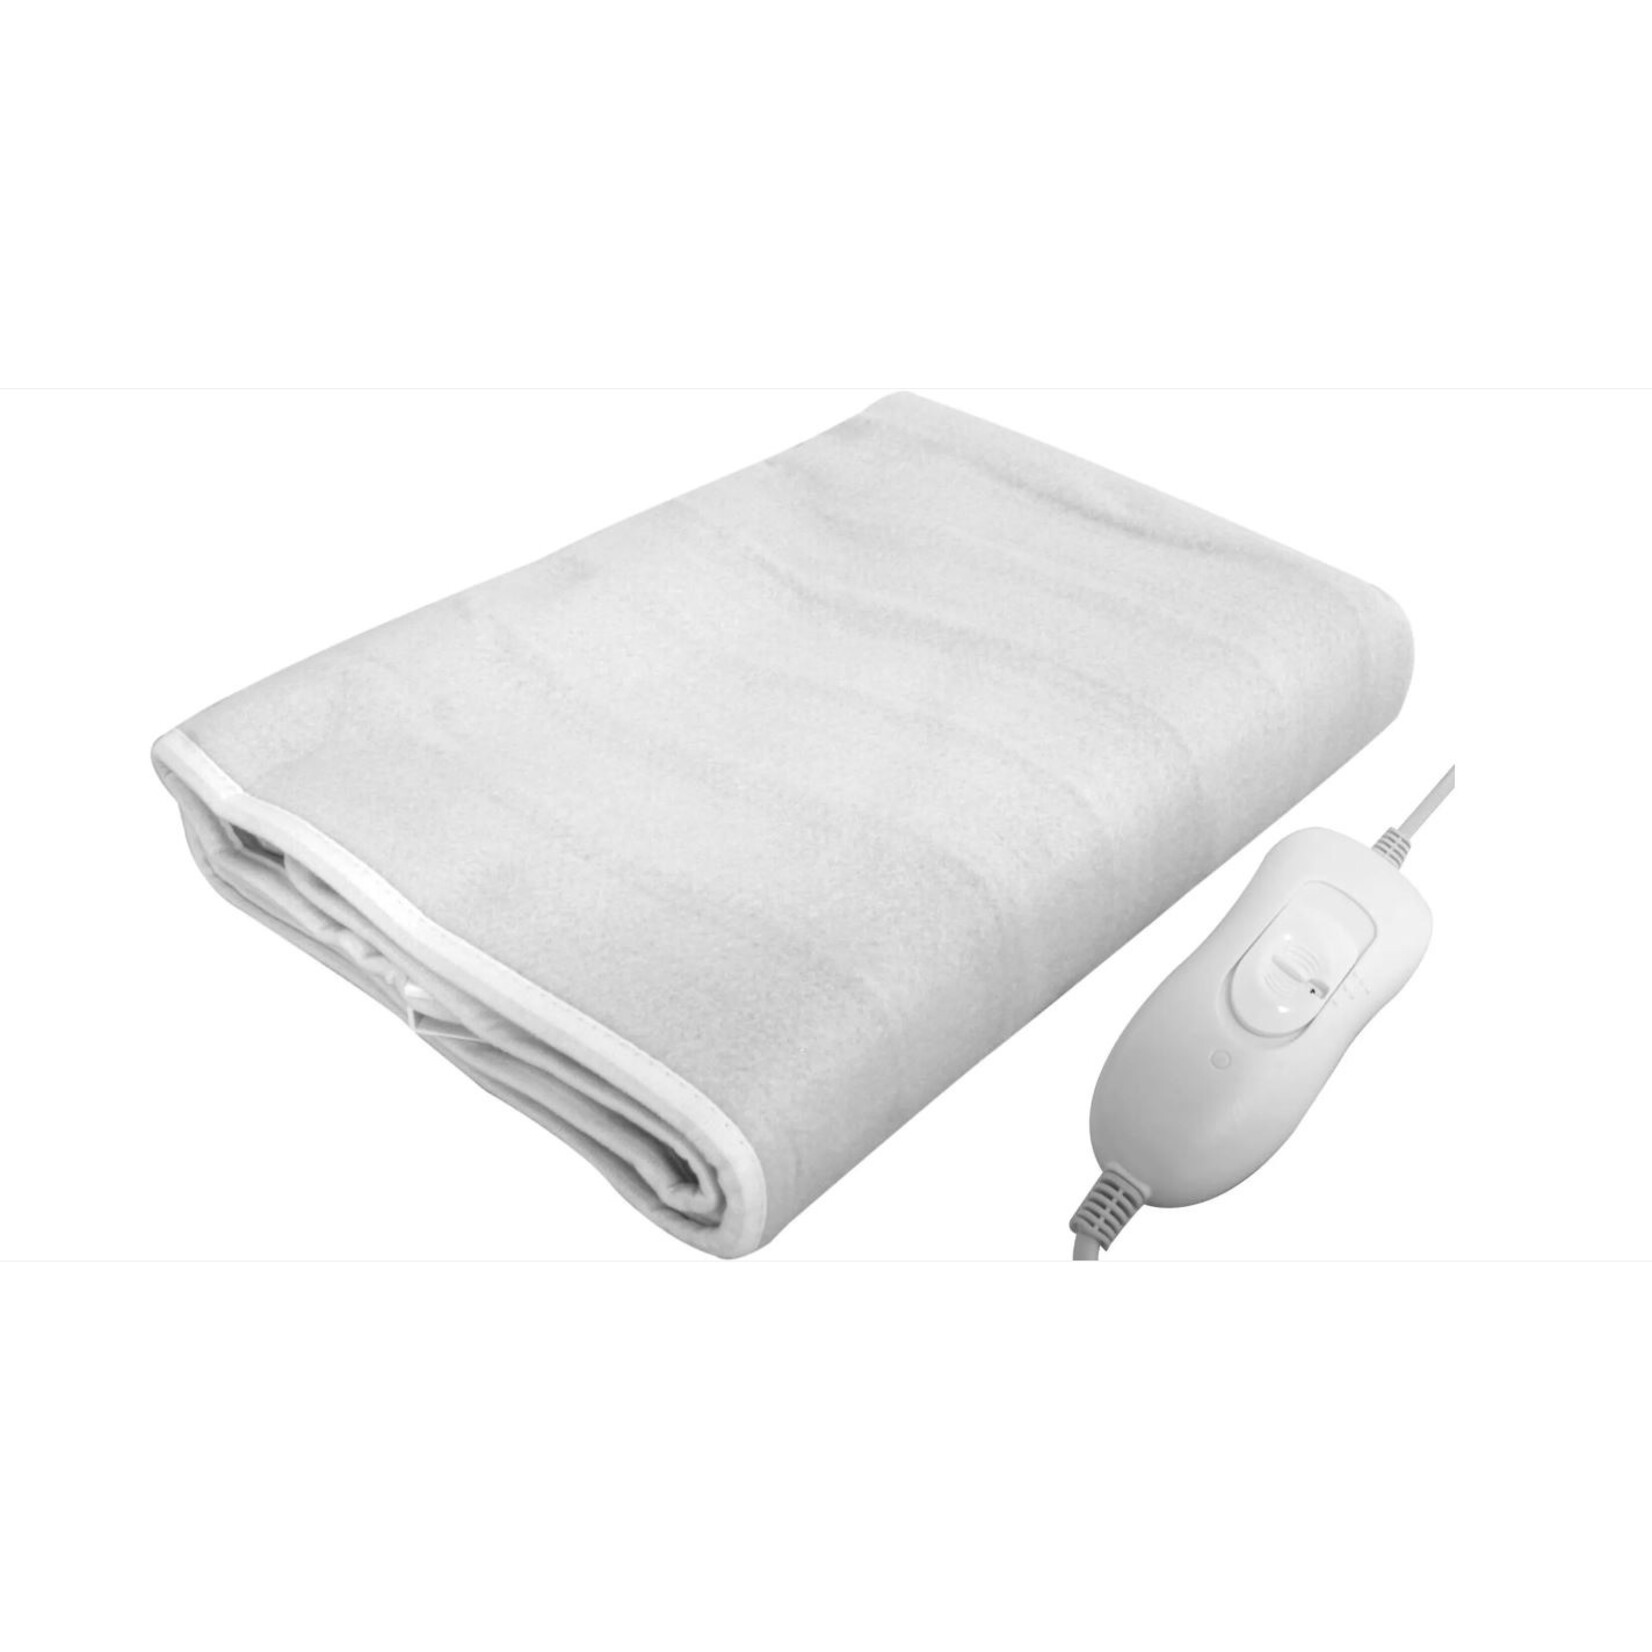 Parya 2 pack Parya Home - Heated Blanket - 3 heat settings - Heat blanket - blanket 1 person - underblanket - 150 x 80 cm - White